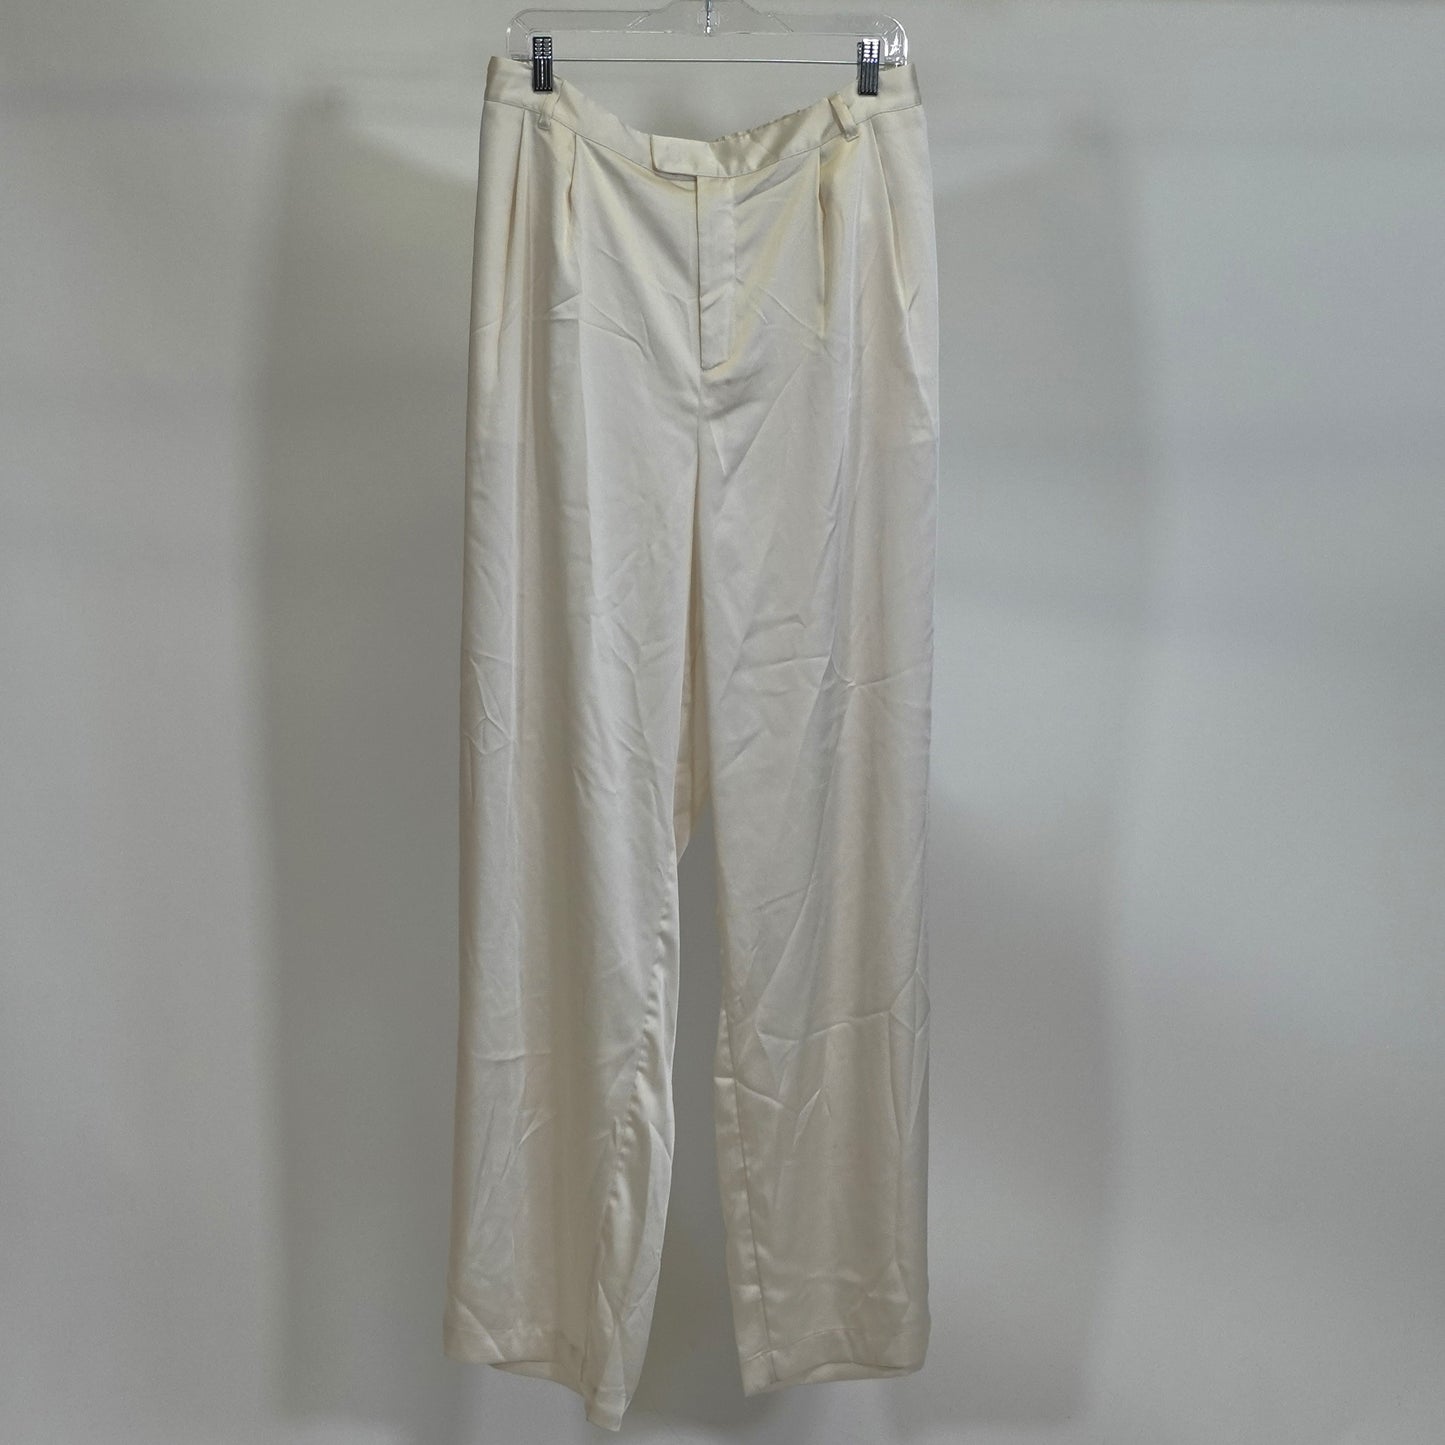 White Satin Pants with Black Side Stripe